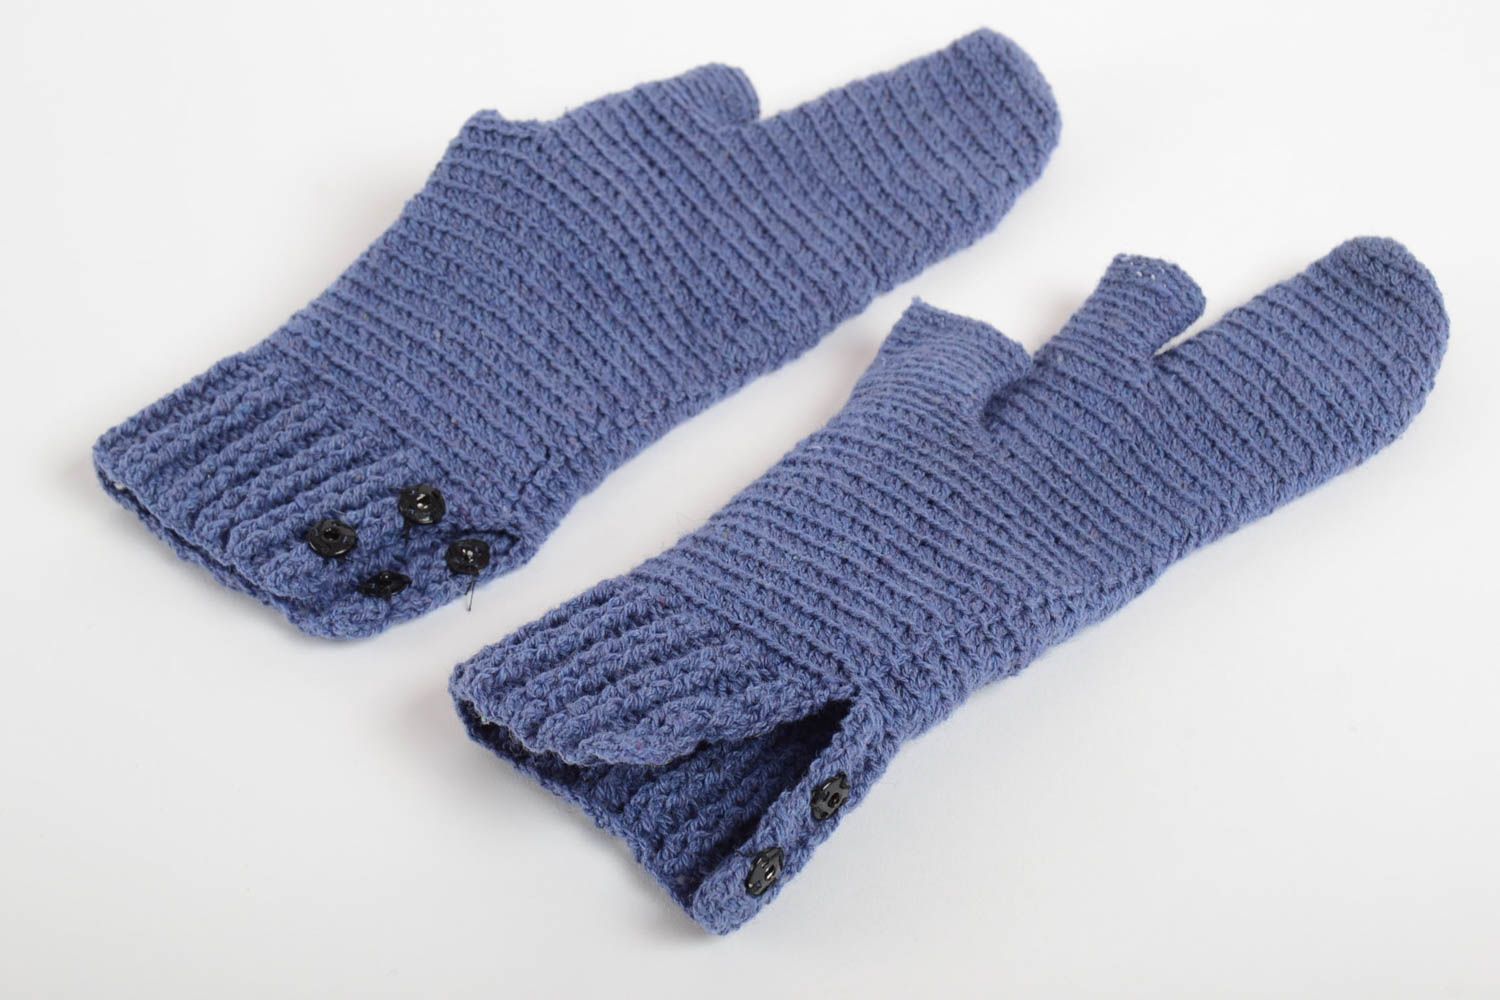 Handmade woolen mittens blue mittens for fishing warm winter acessories photo 4